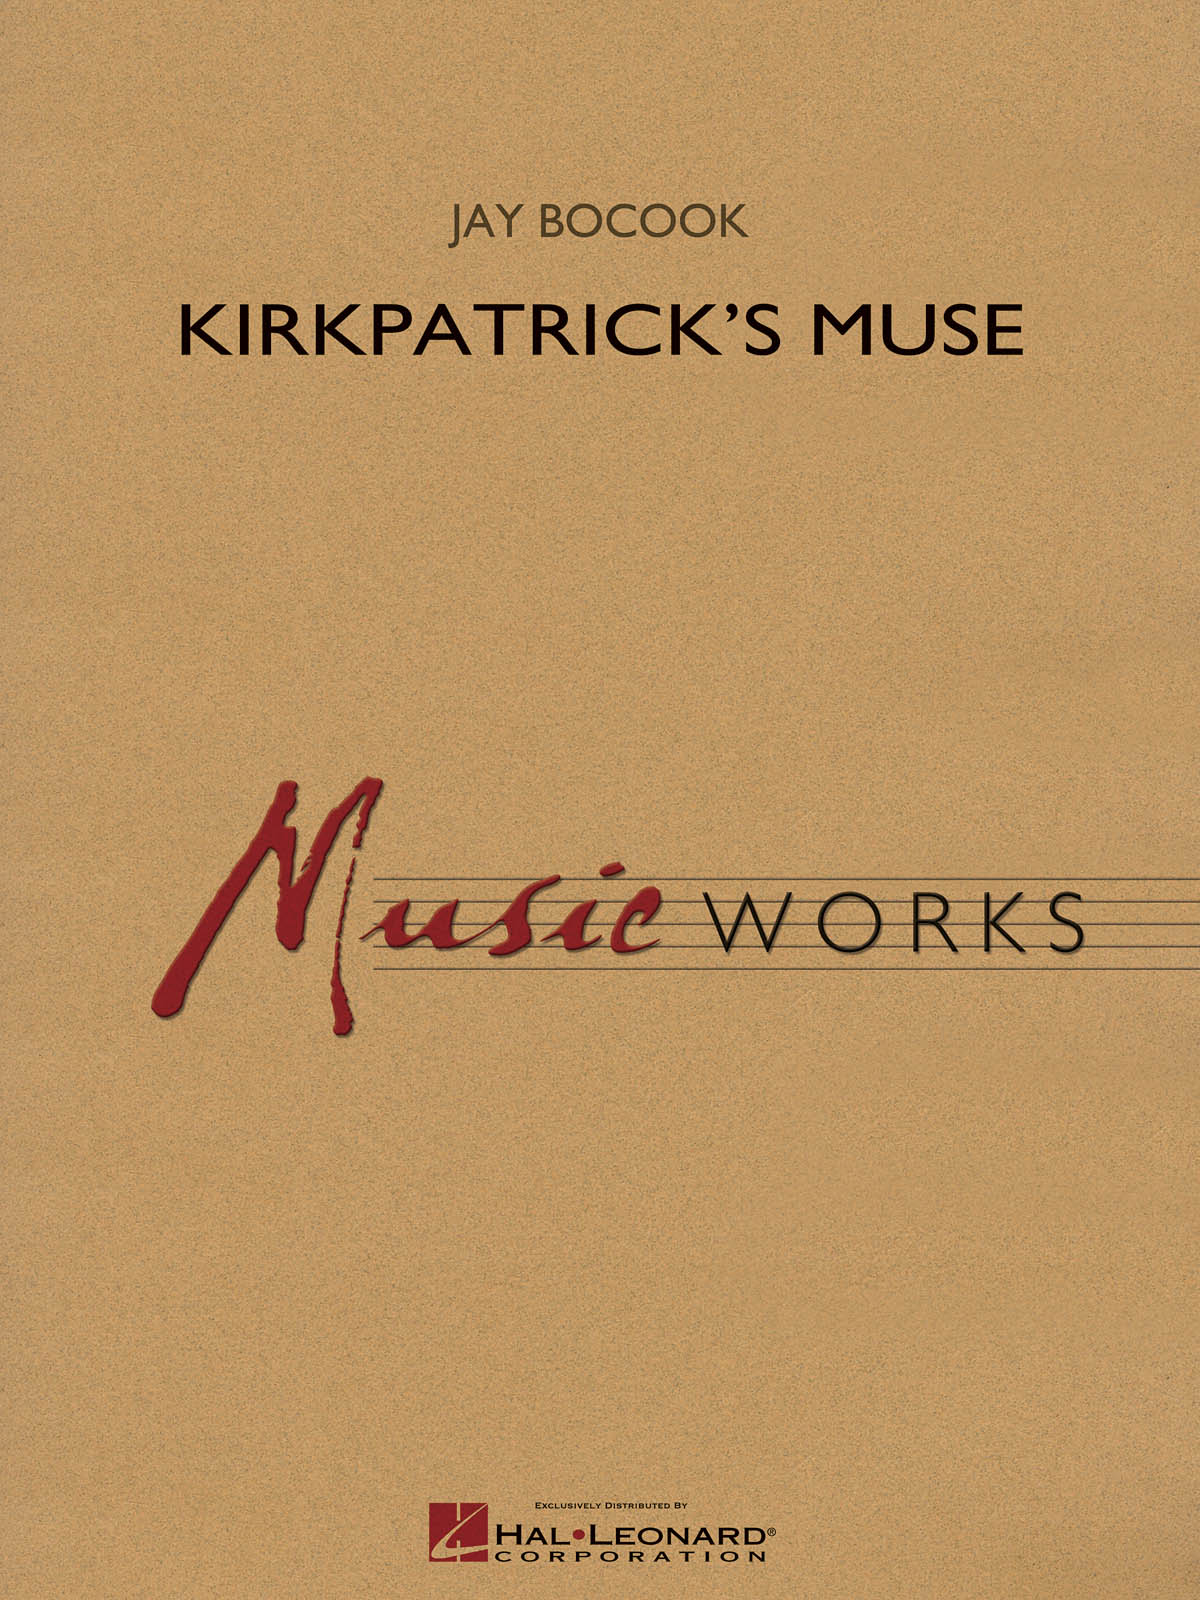 Kirkpatrick’s Muse